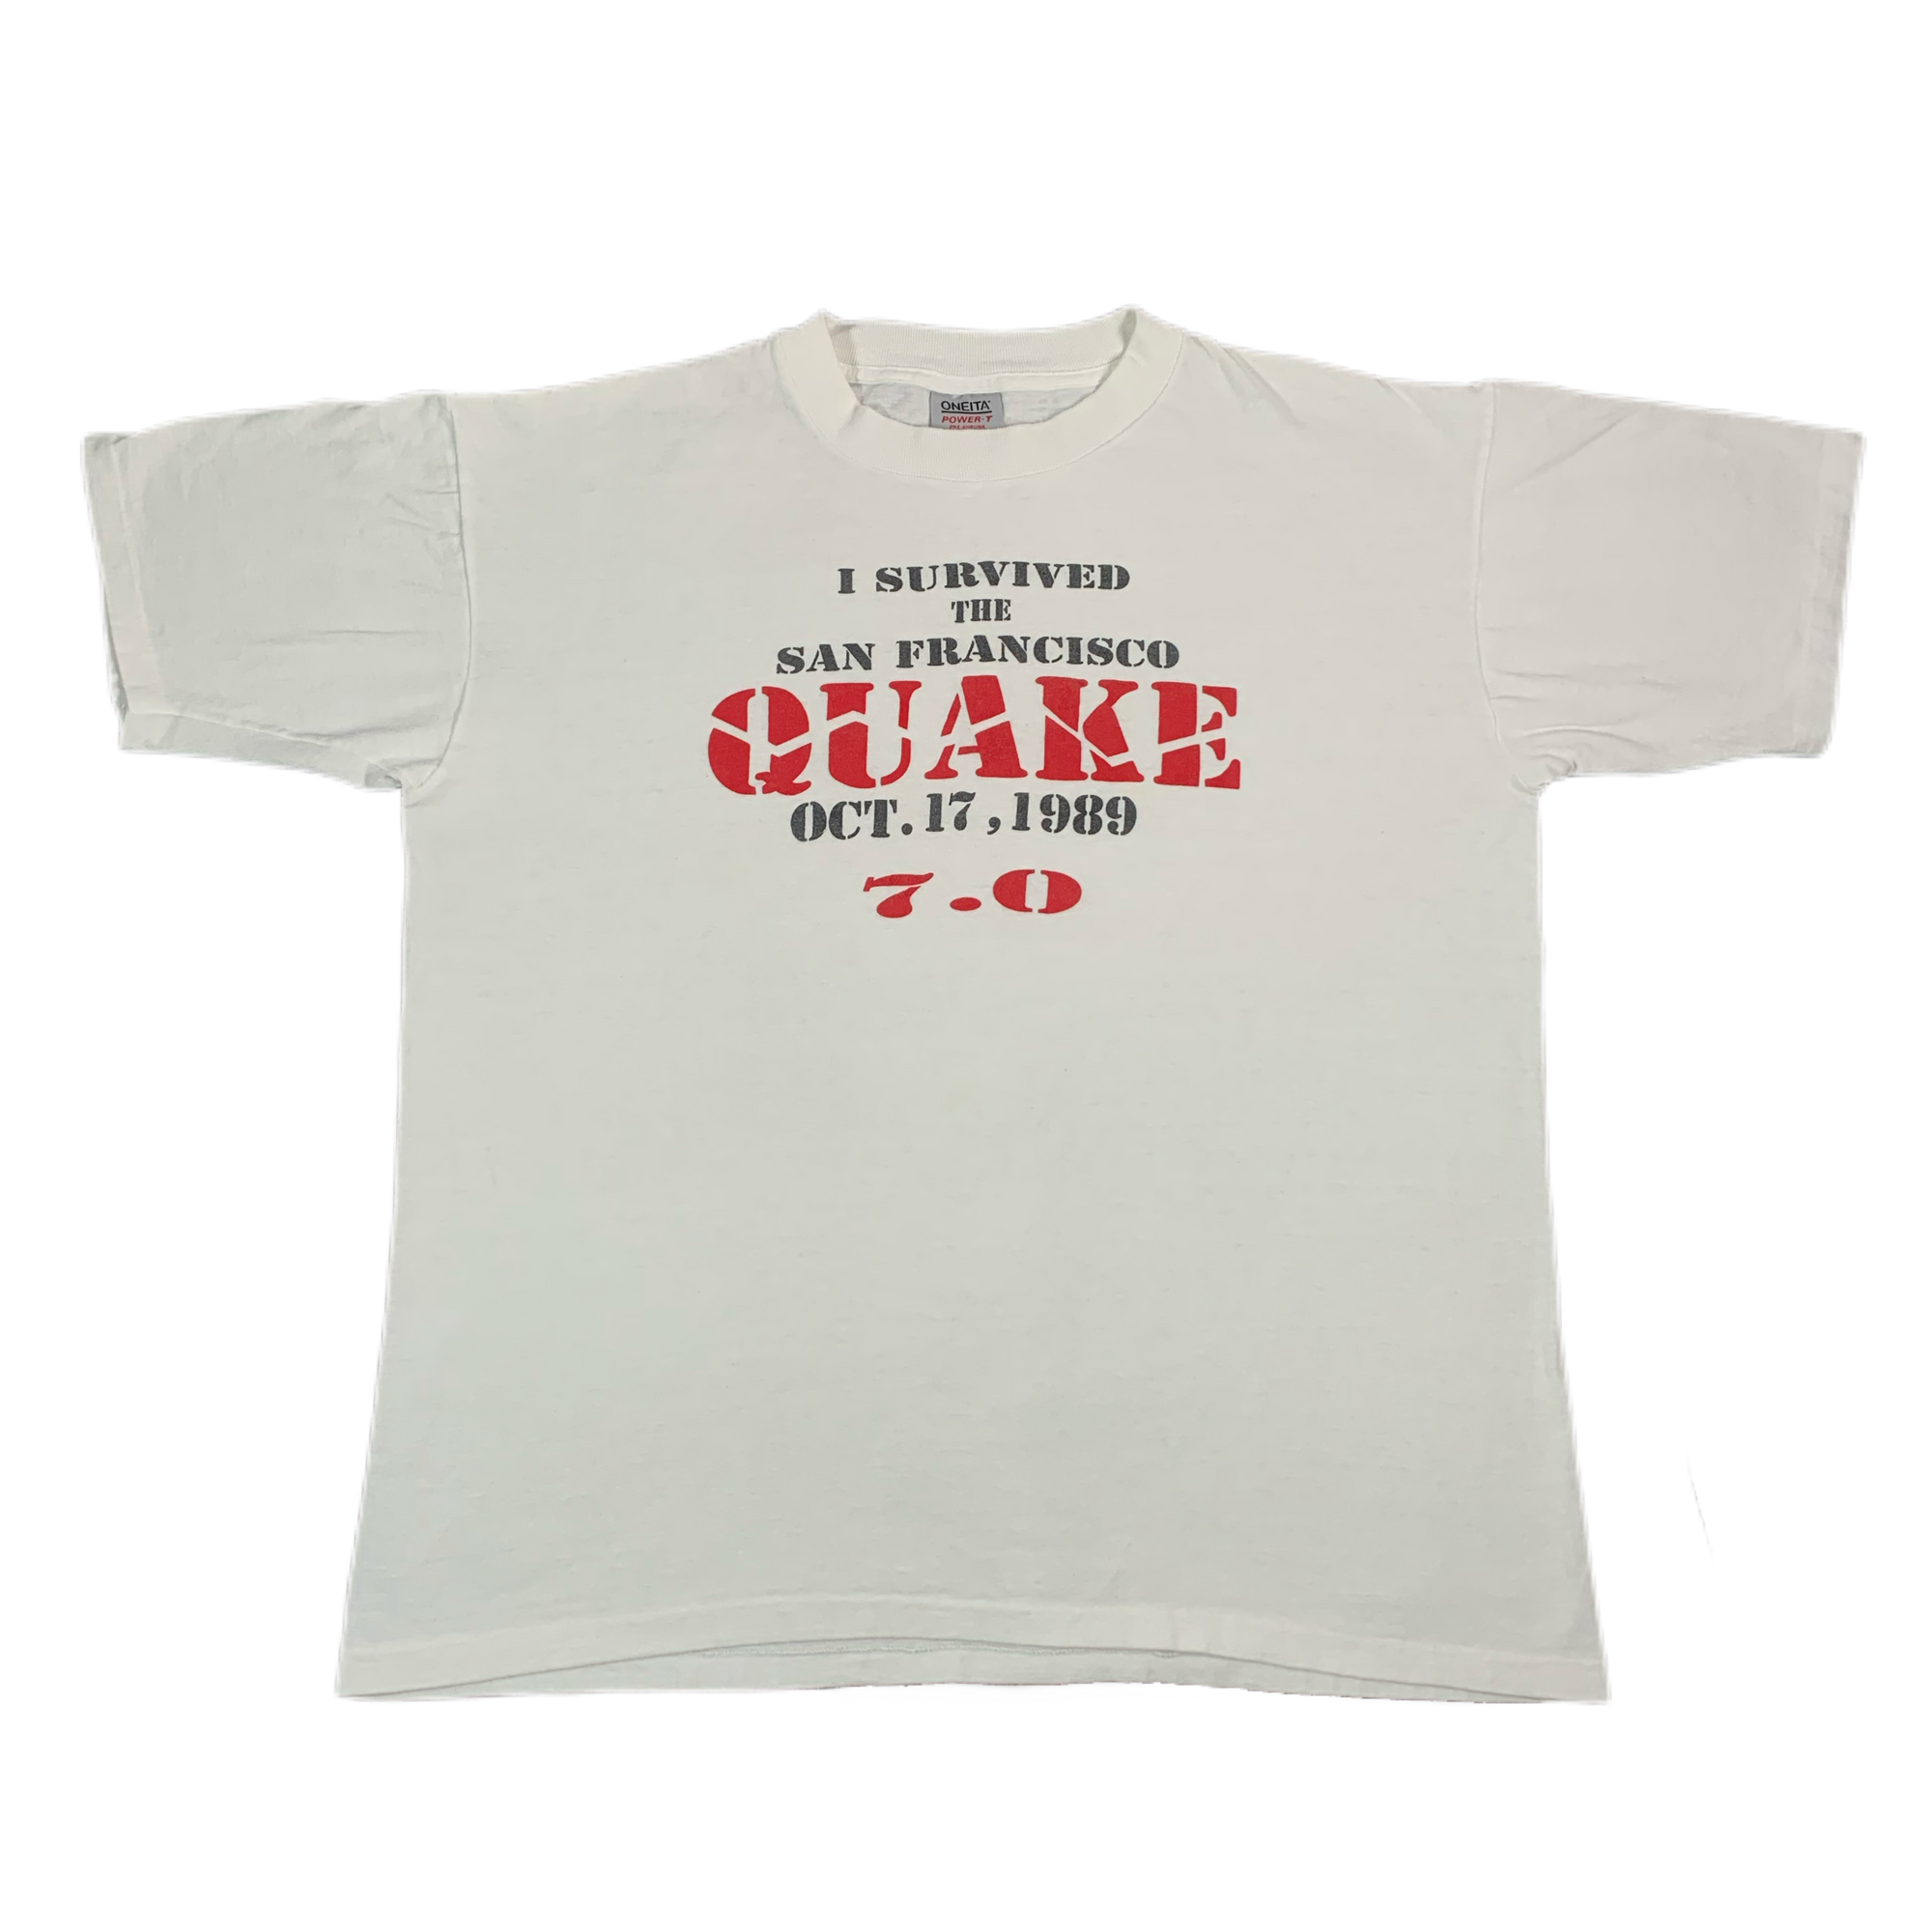 Vintage San Francisco “Quake” T-Shirt - jointcustodydc